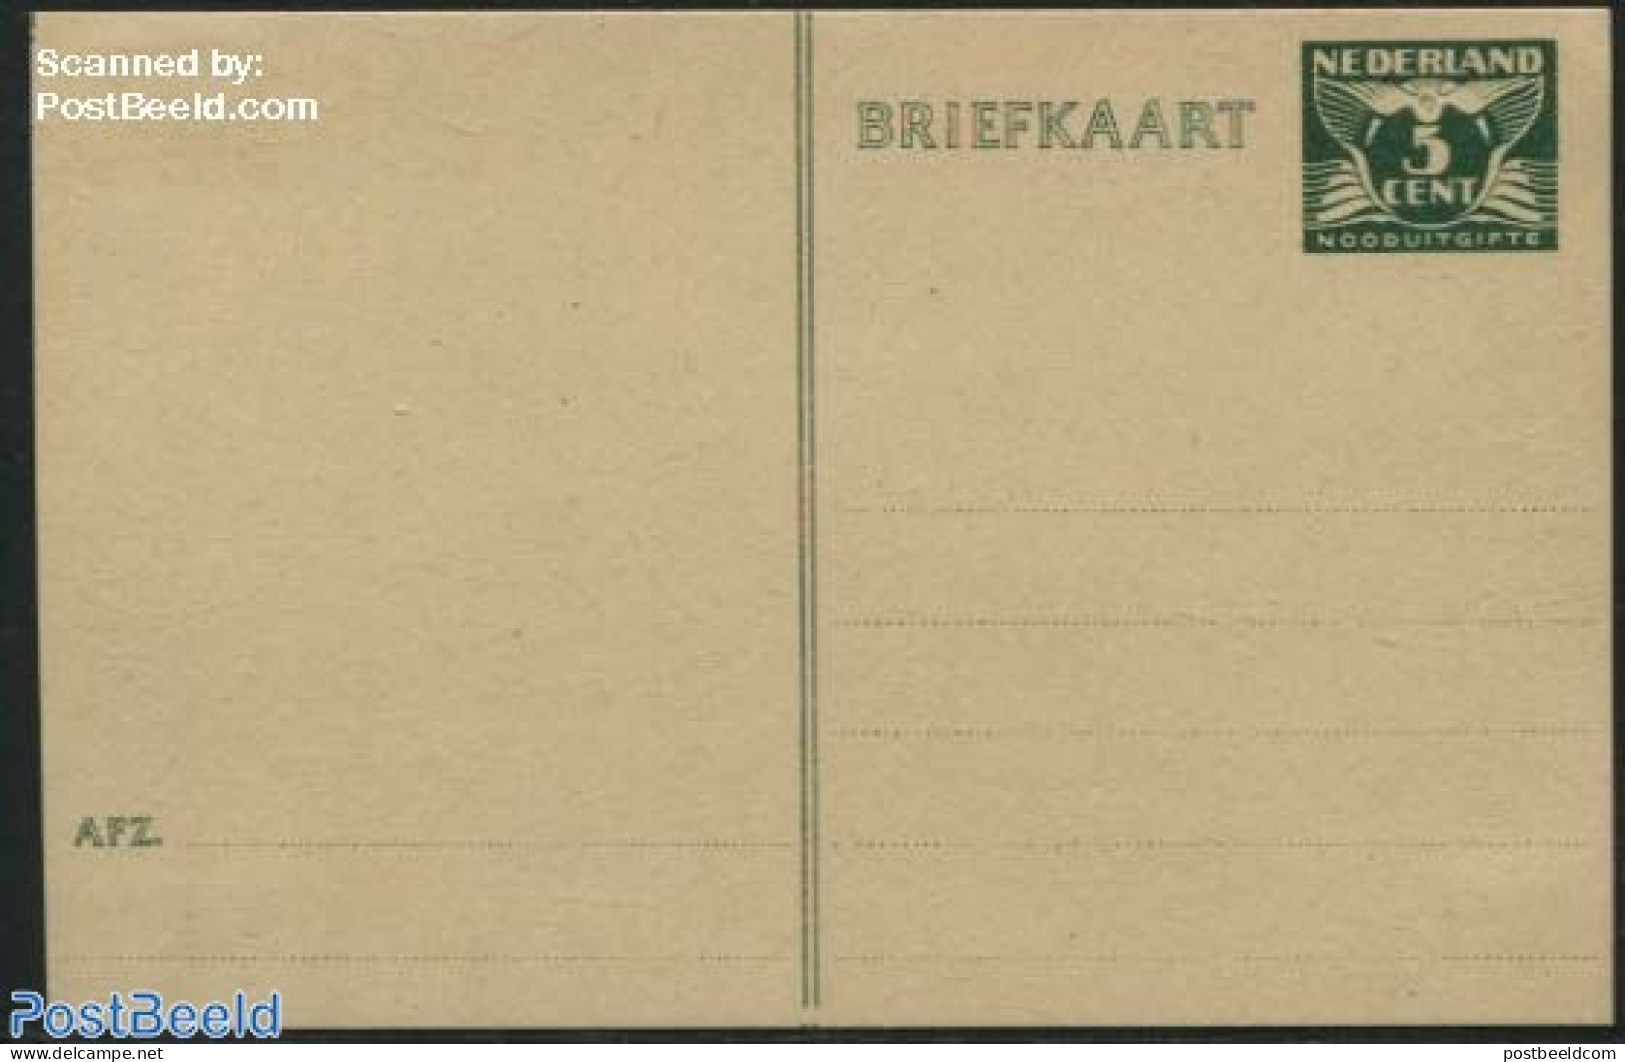 Netherlands 1945 Postcard 5c Nooduitgifte, Cream Paper, Unused Postal Stationary - Covers & Documents